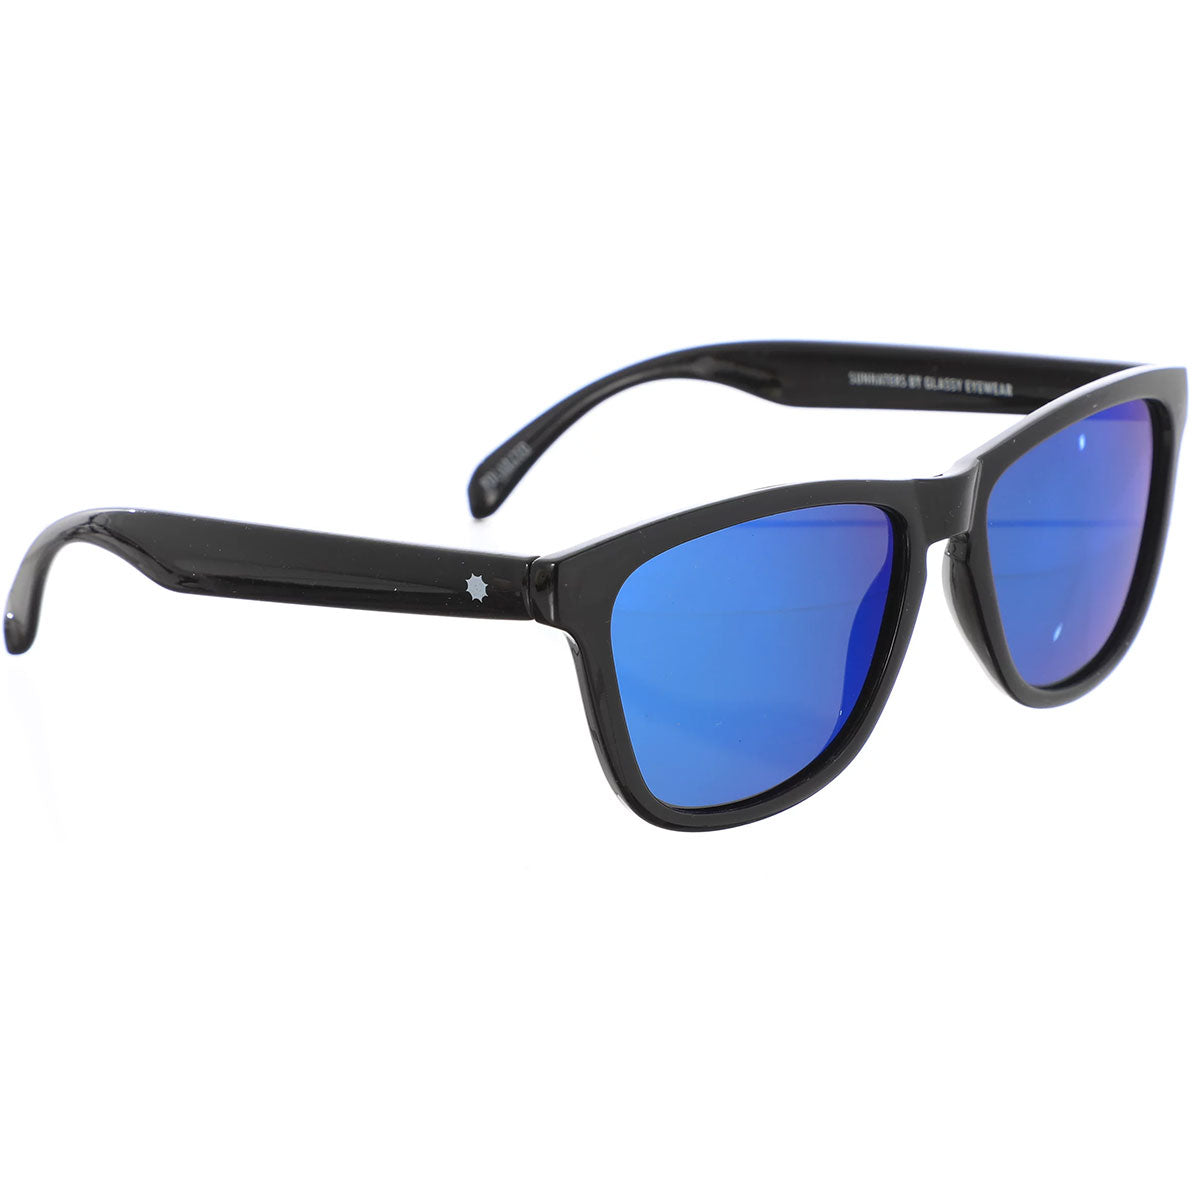 Glassy Deric Polarized Sunglasses - Black/Blue Mirror image 1